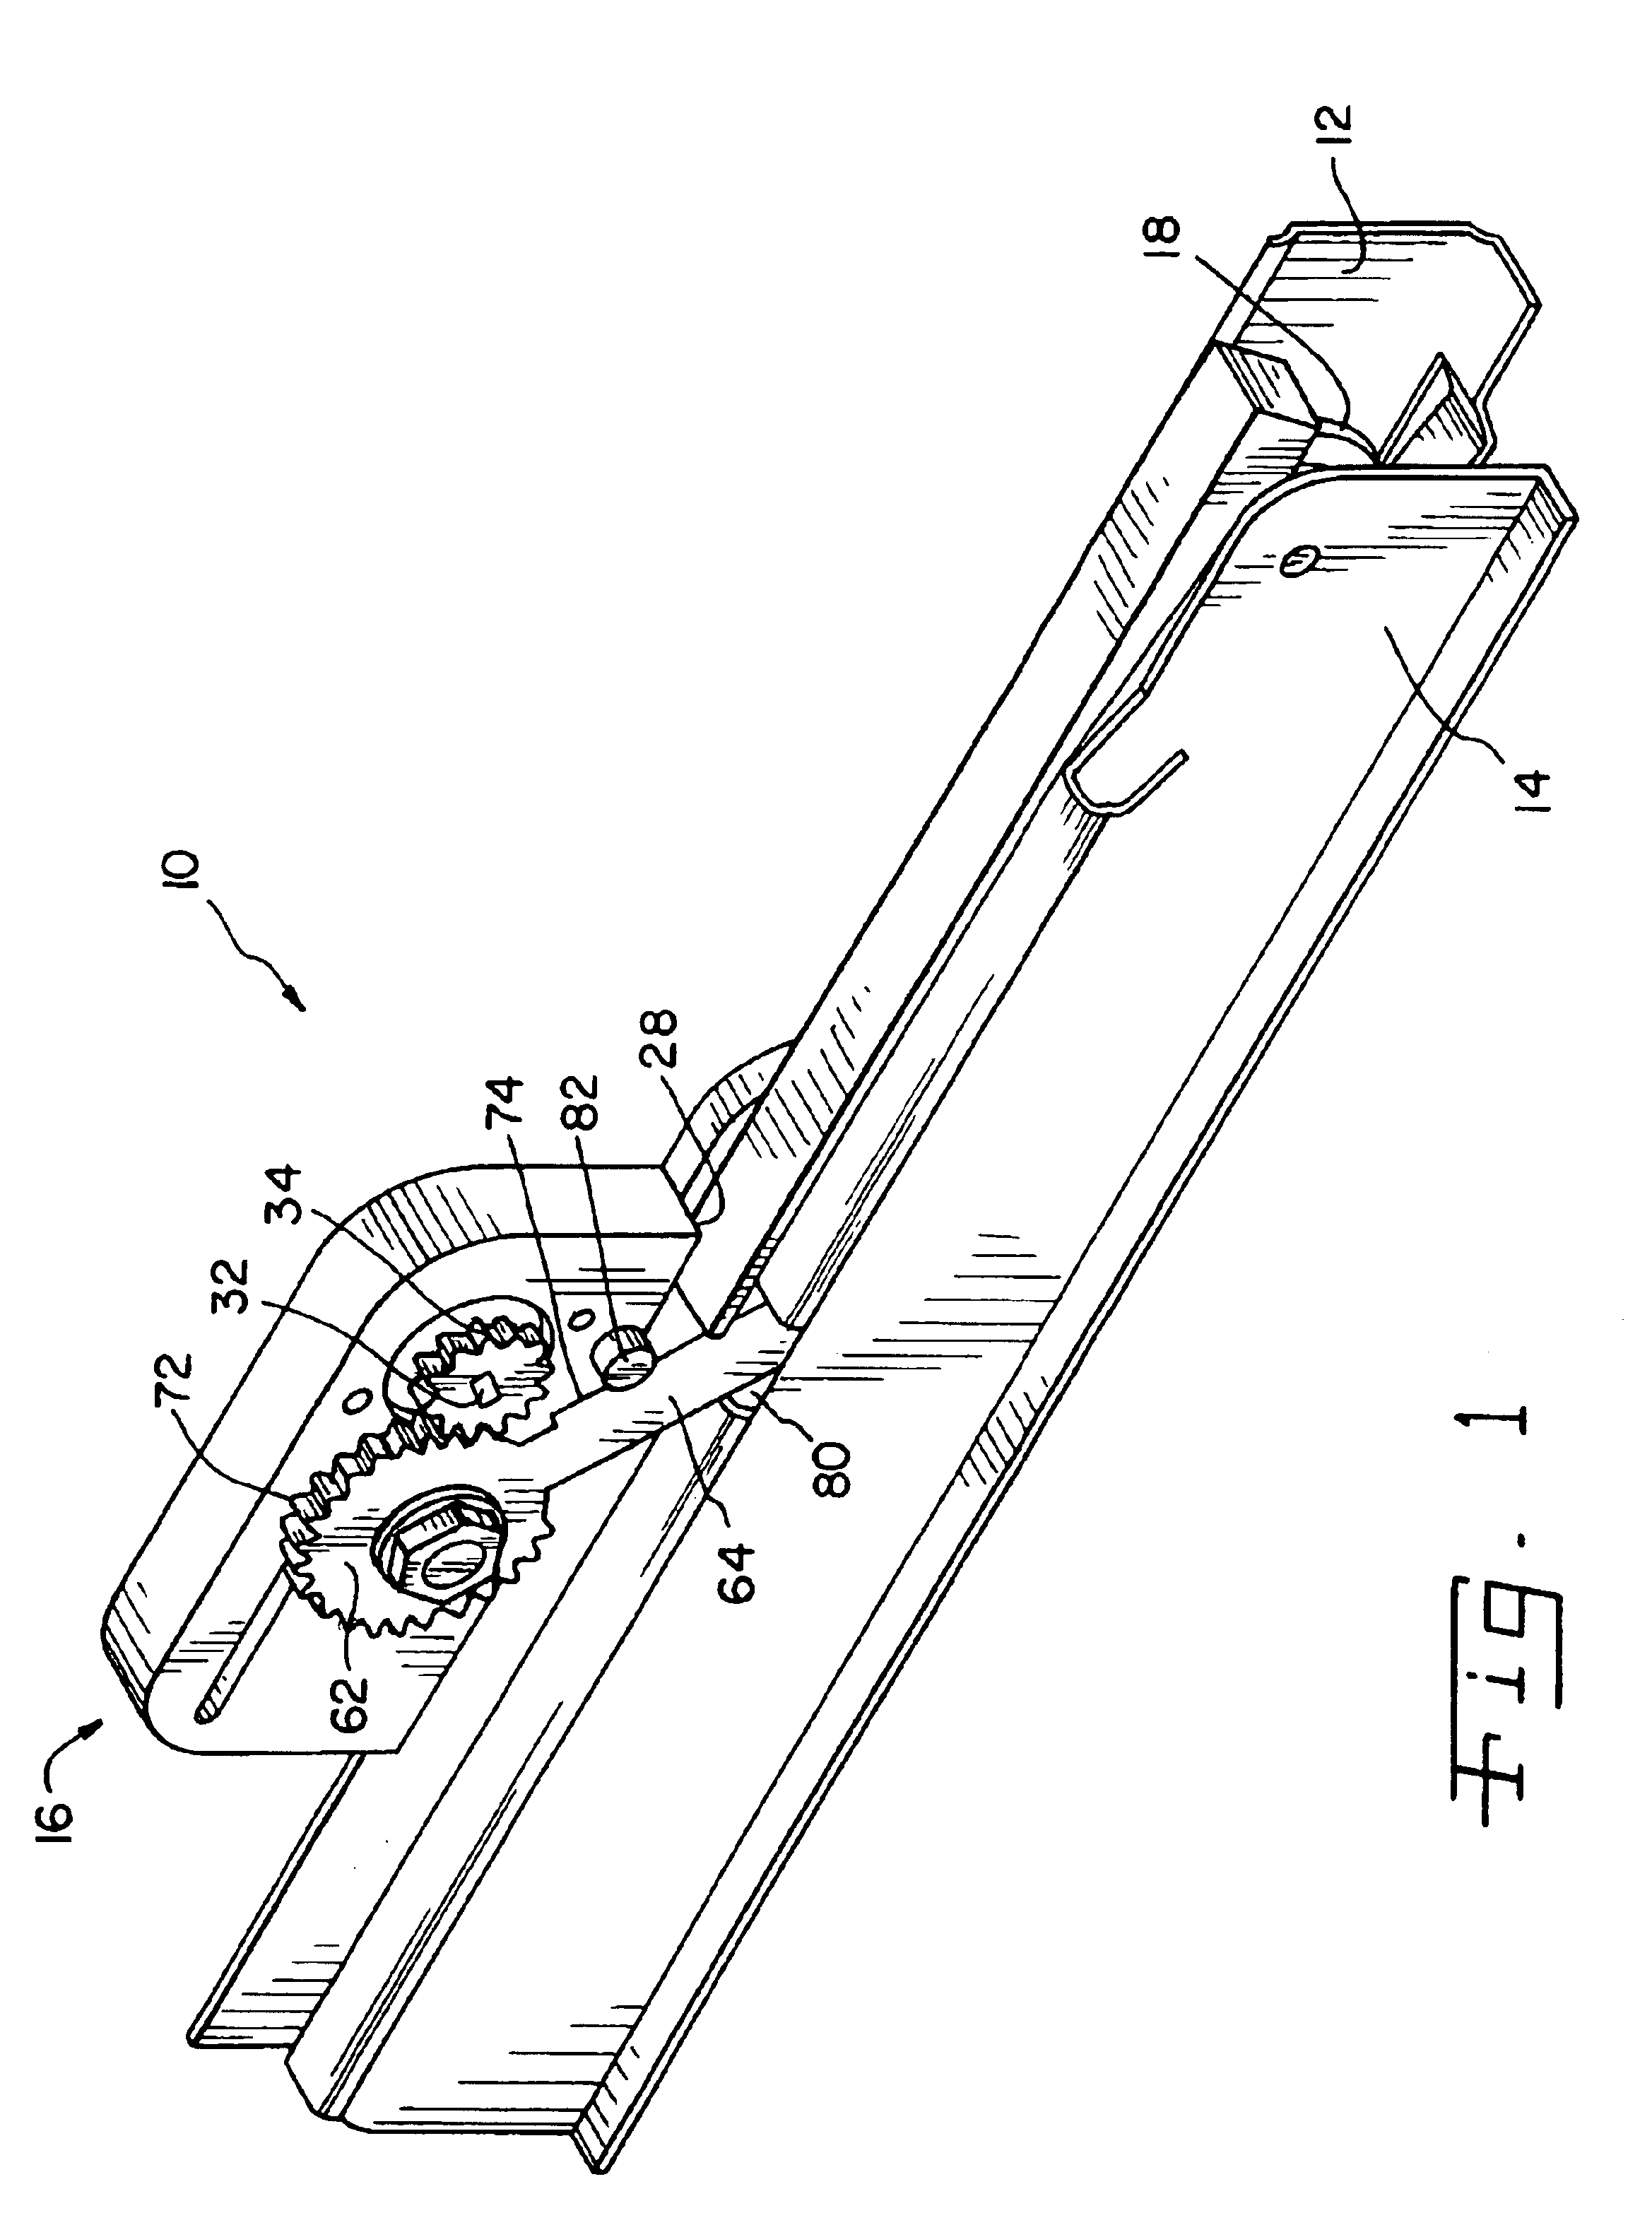 Damped drawer slide mechanism